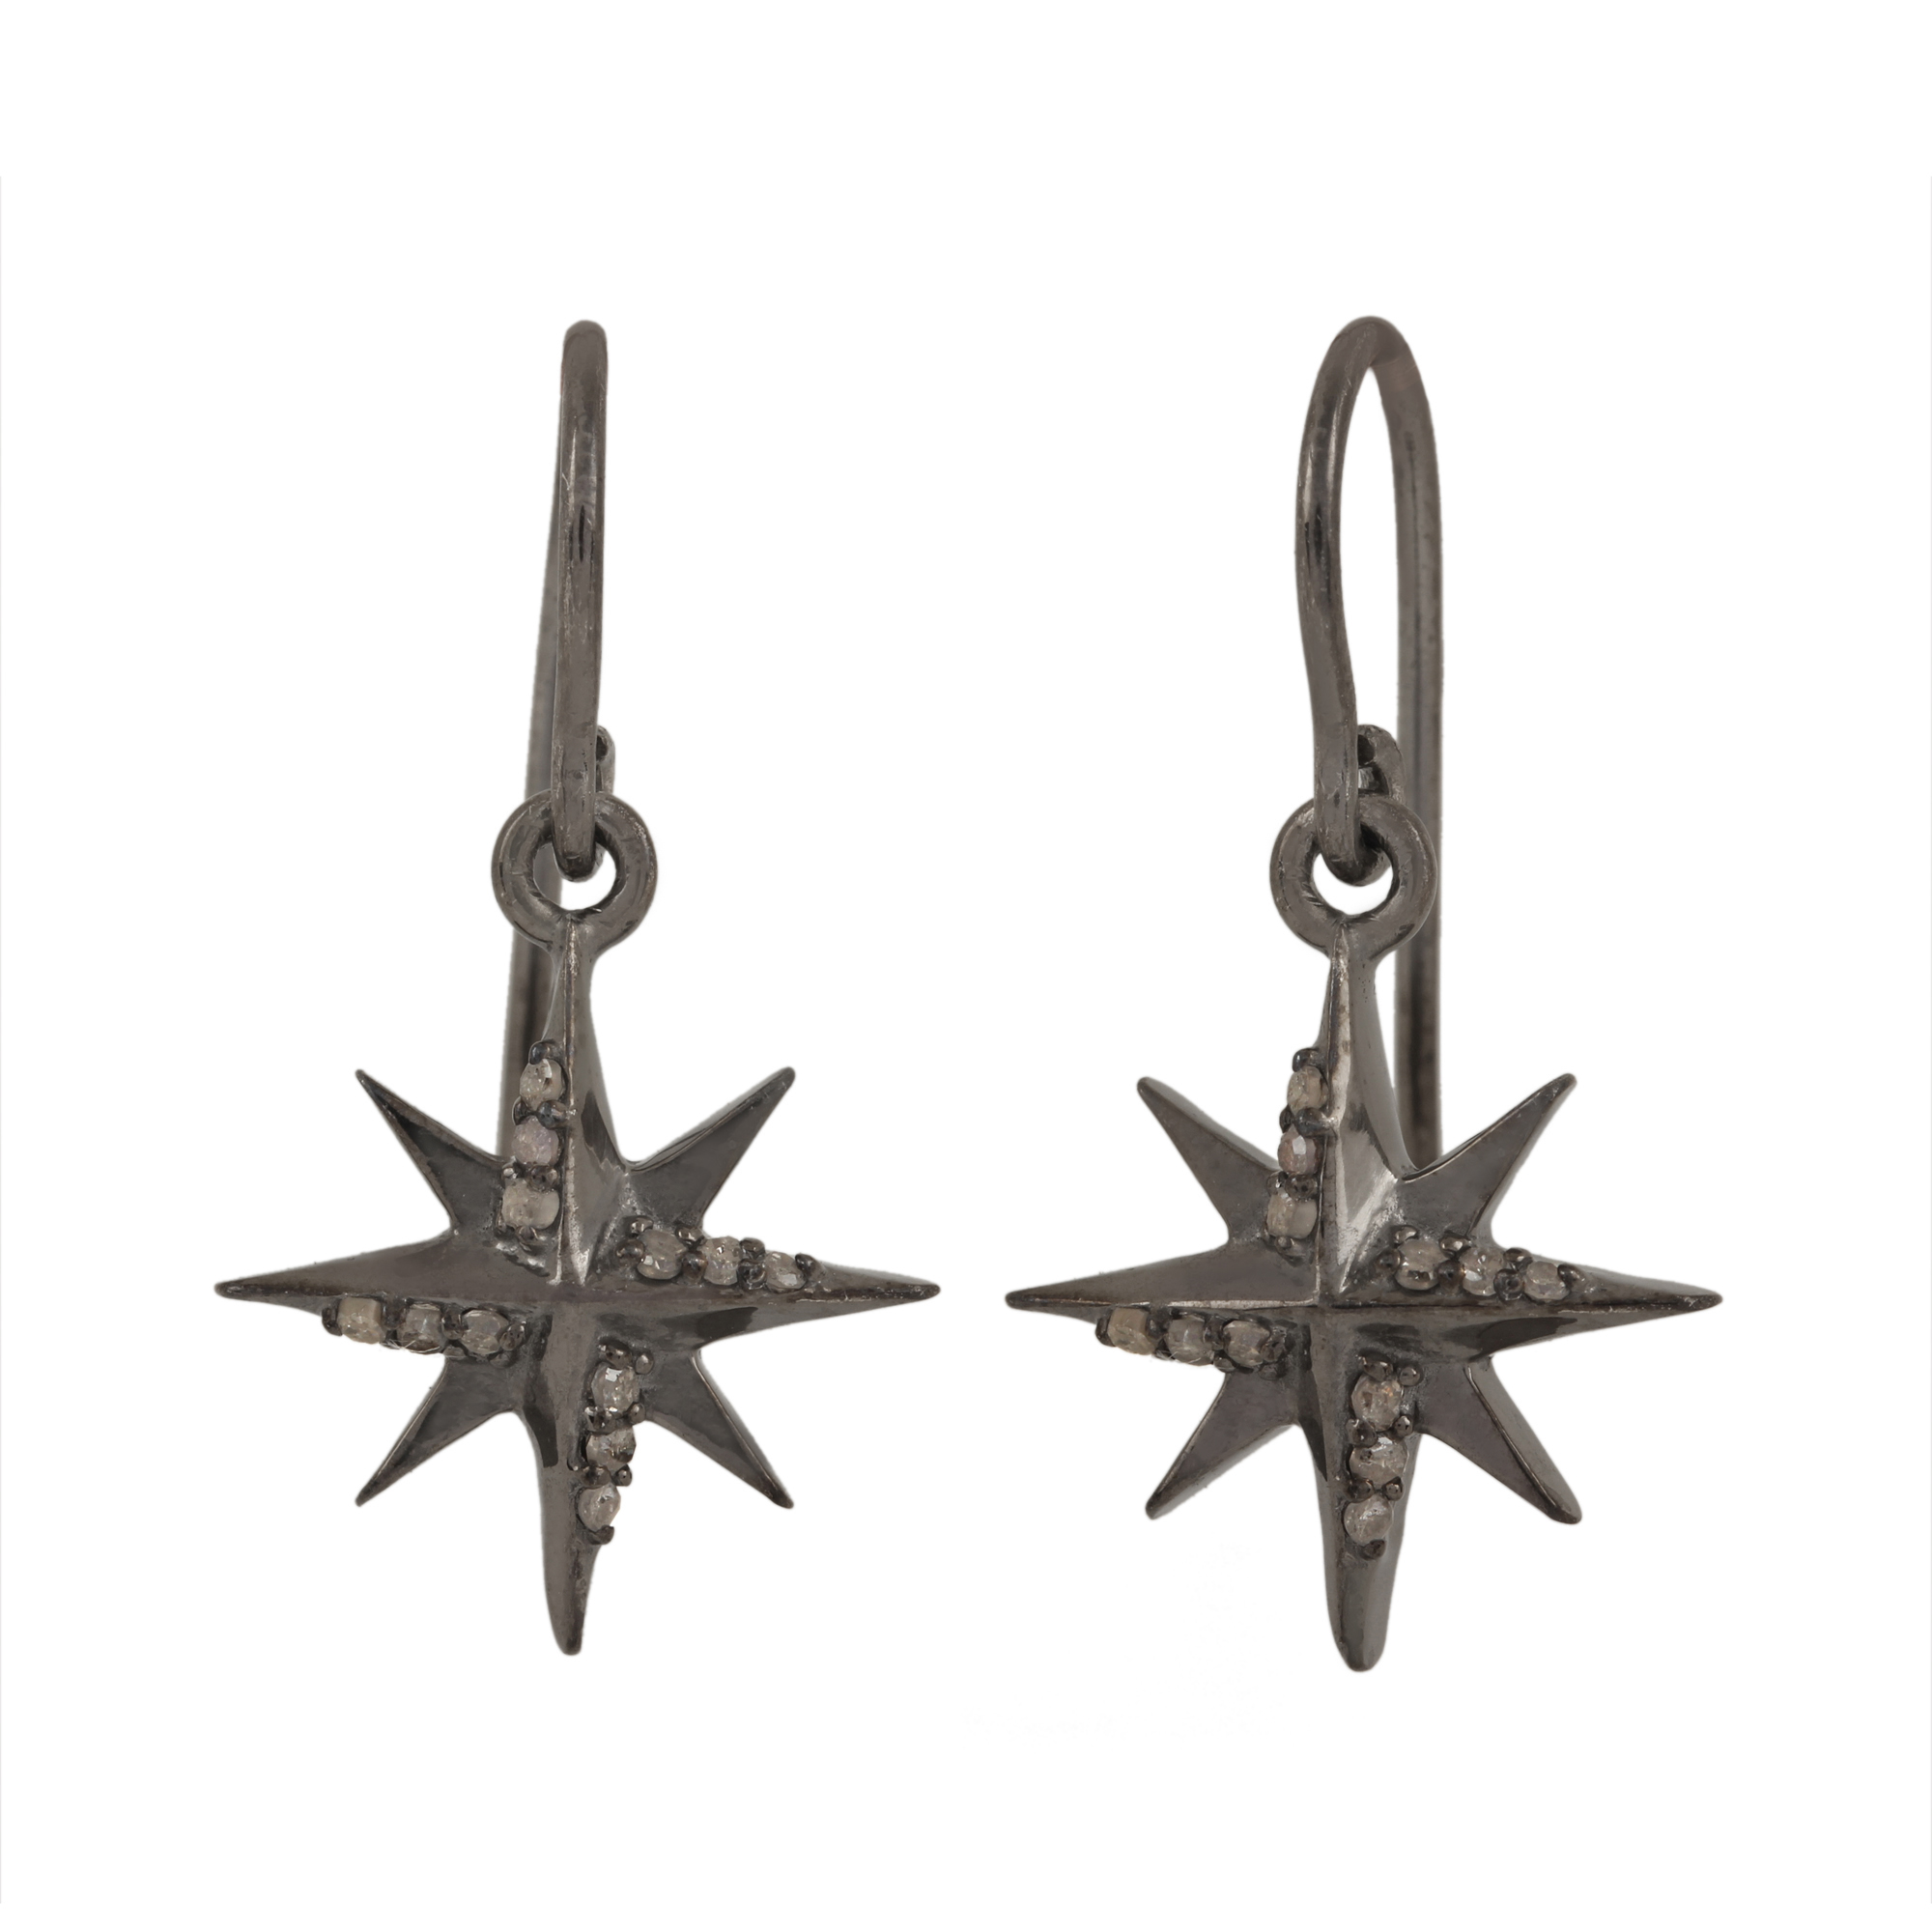 Genuine diamond star hook earrings made in 925 sterling silver